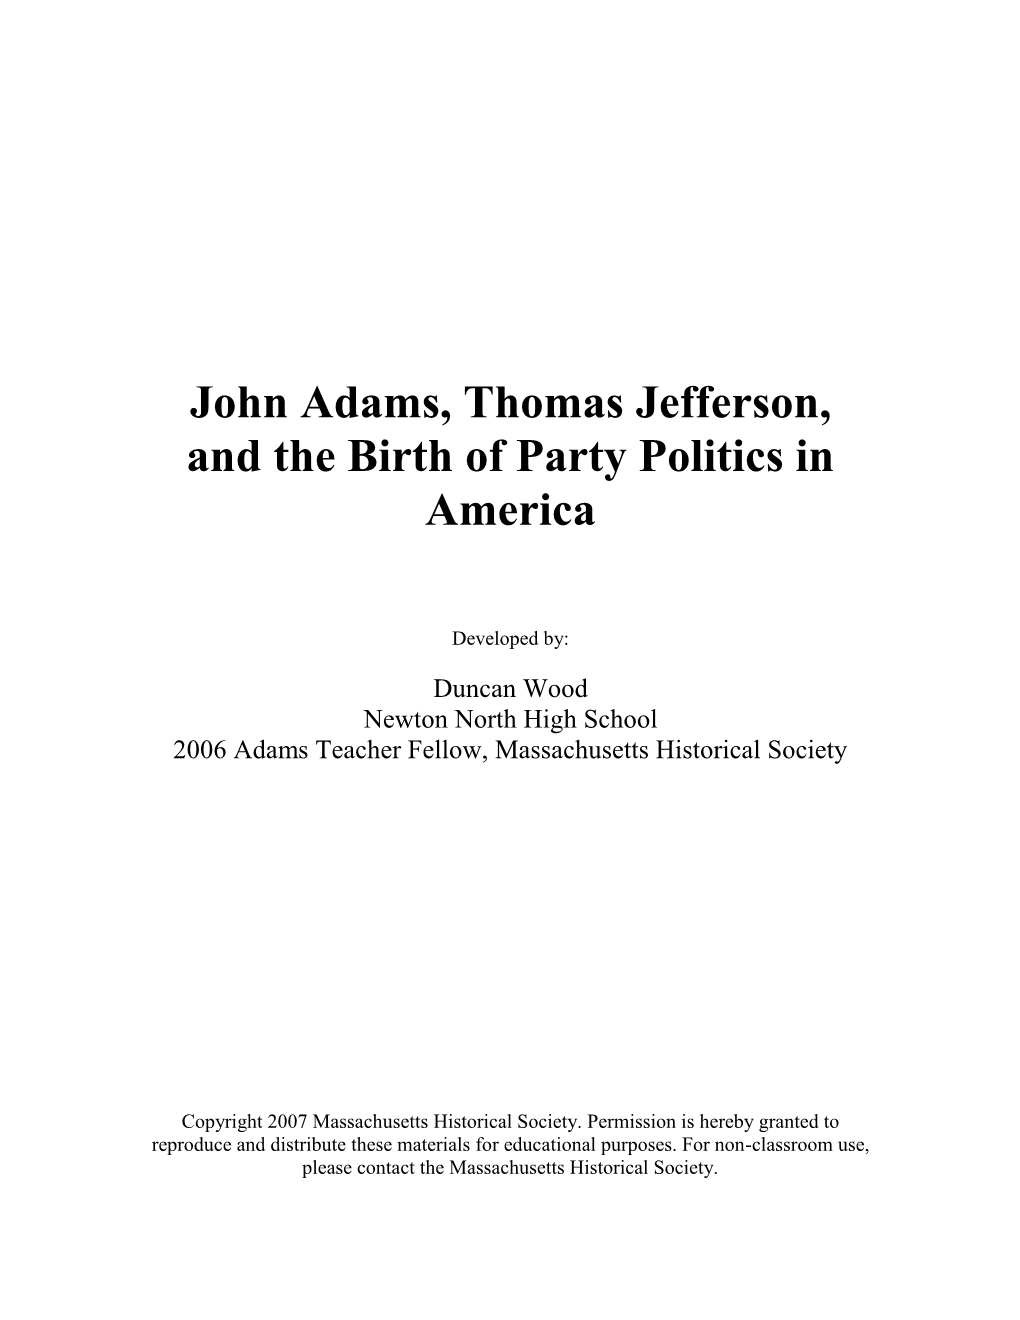 Adams Jefferson Unit